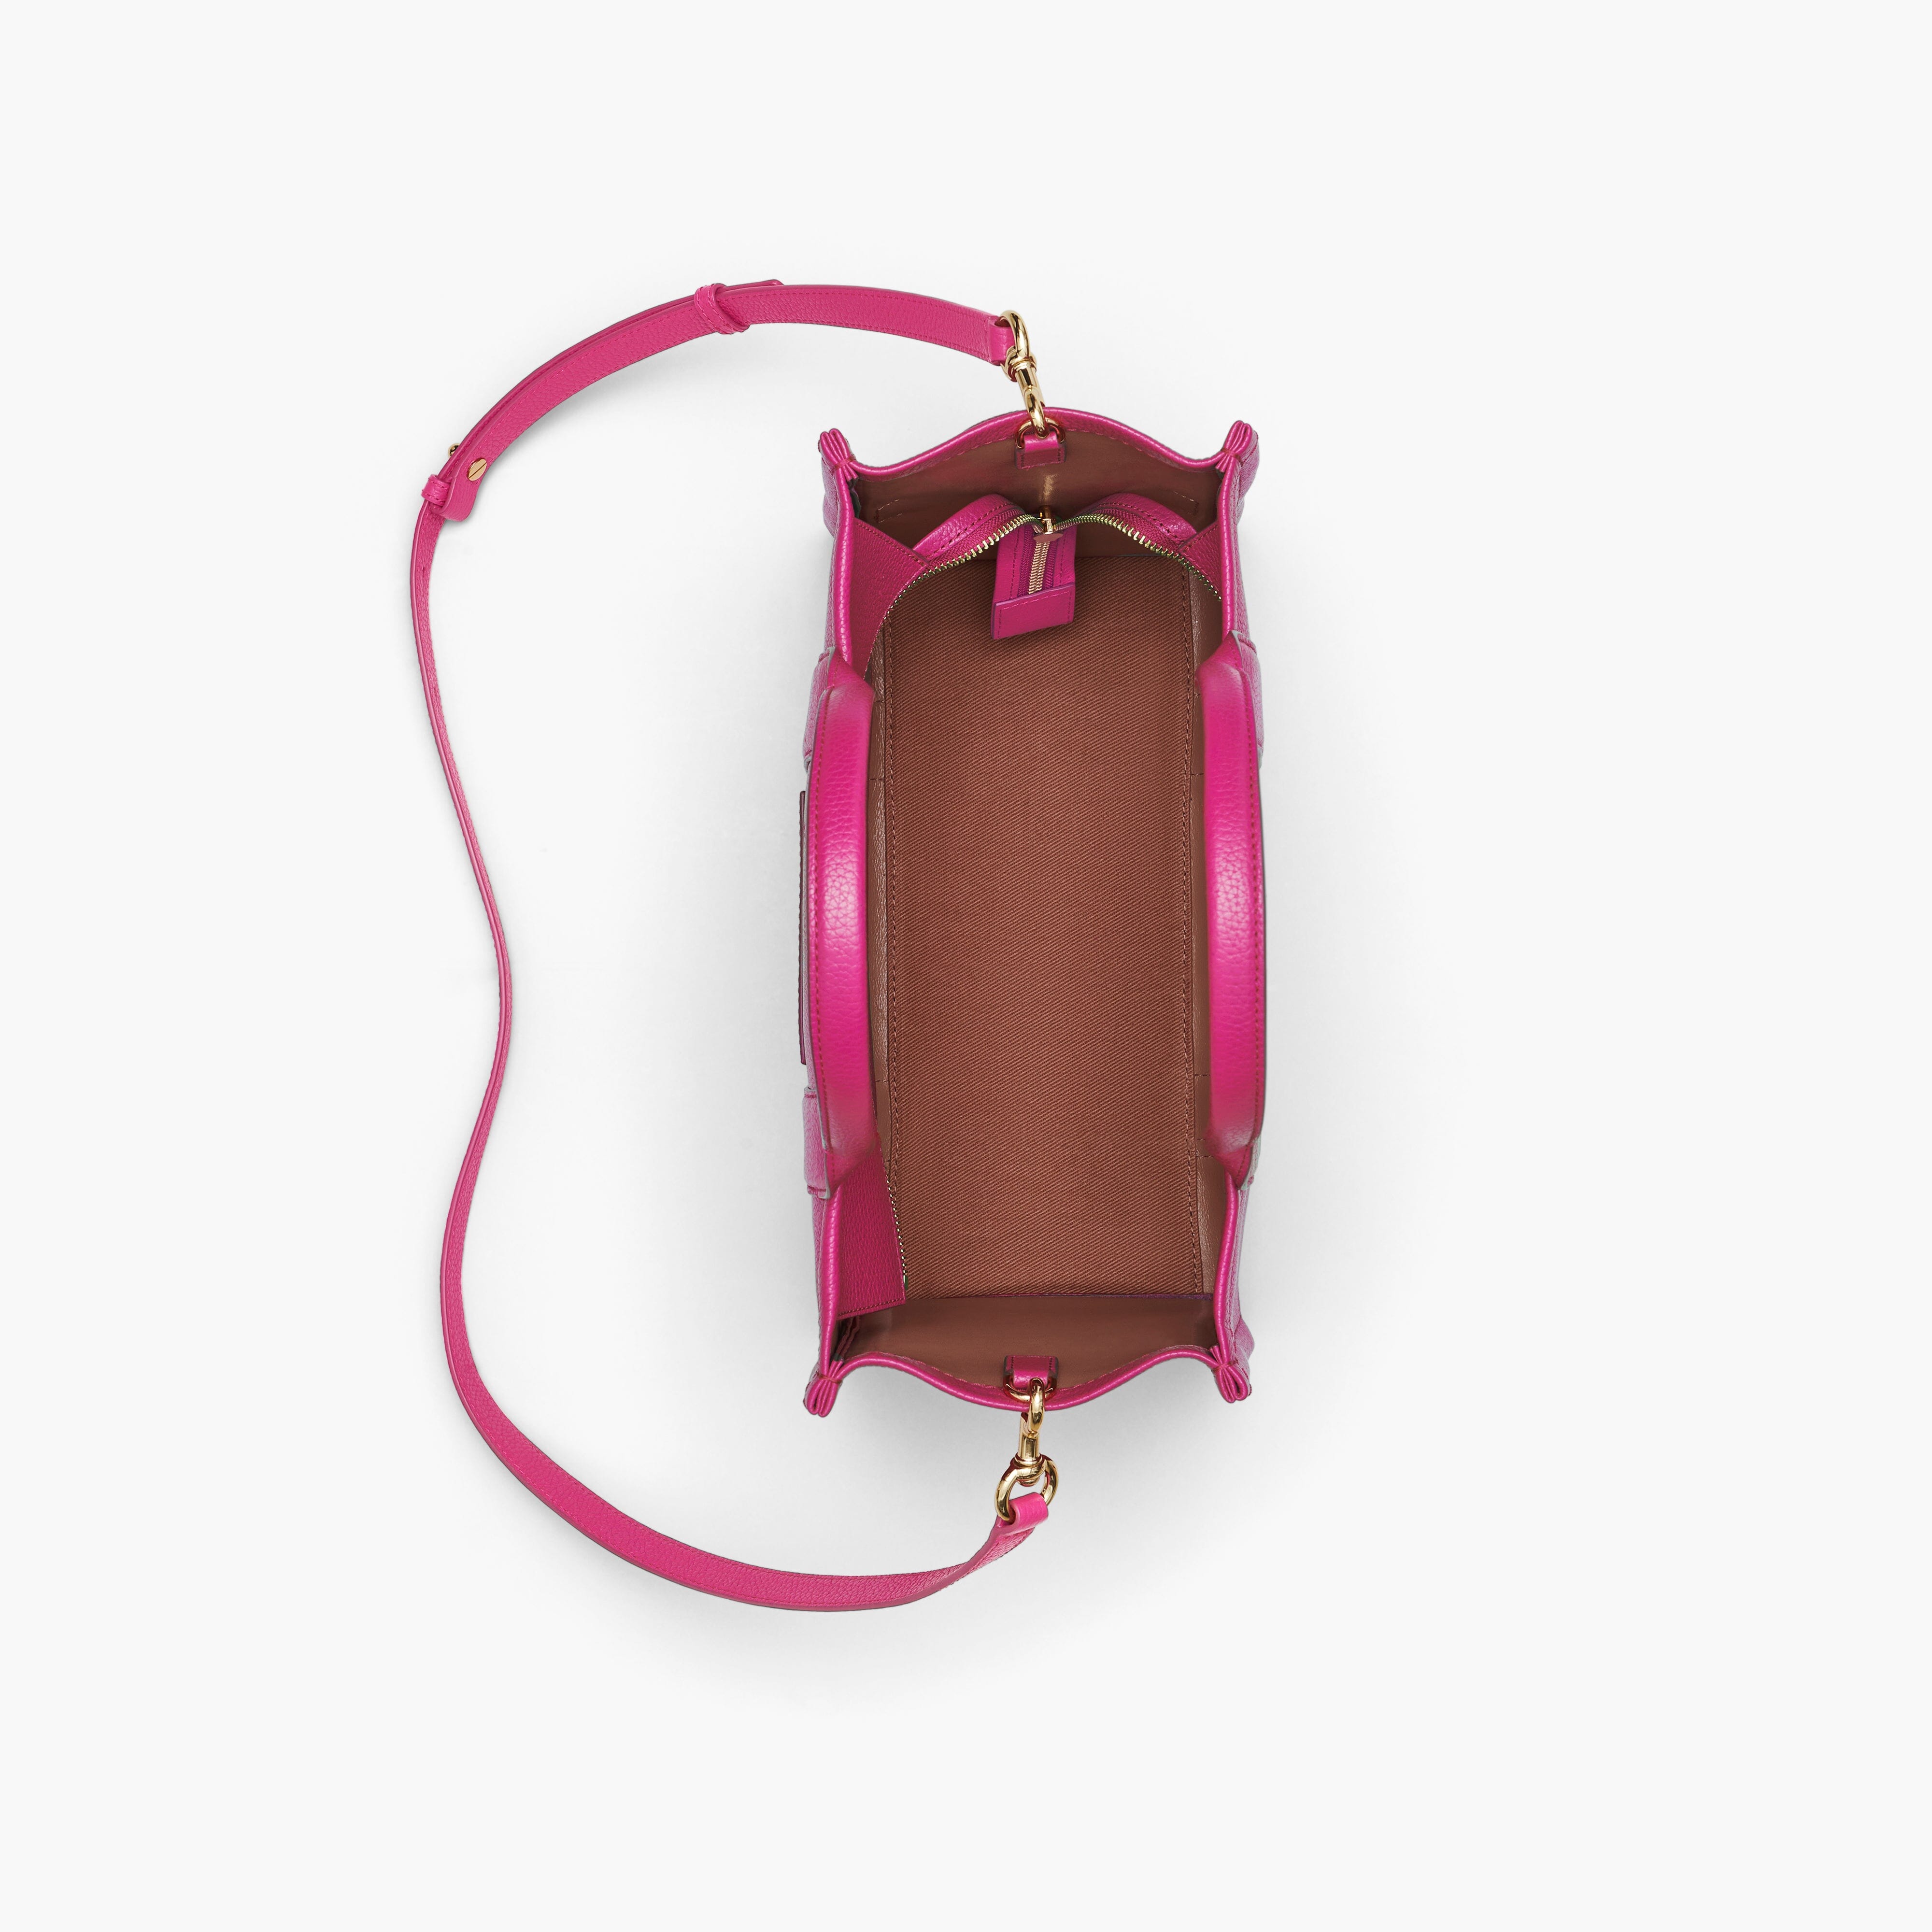 MARC JACOBS - Medium Tote Bag H004L01PF21-955 - Lipstick Pink Borse Marc Jacobs 